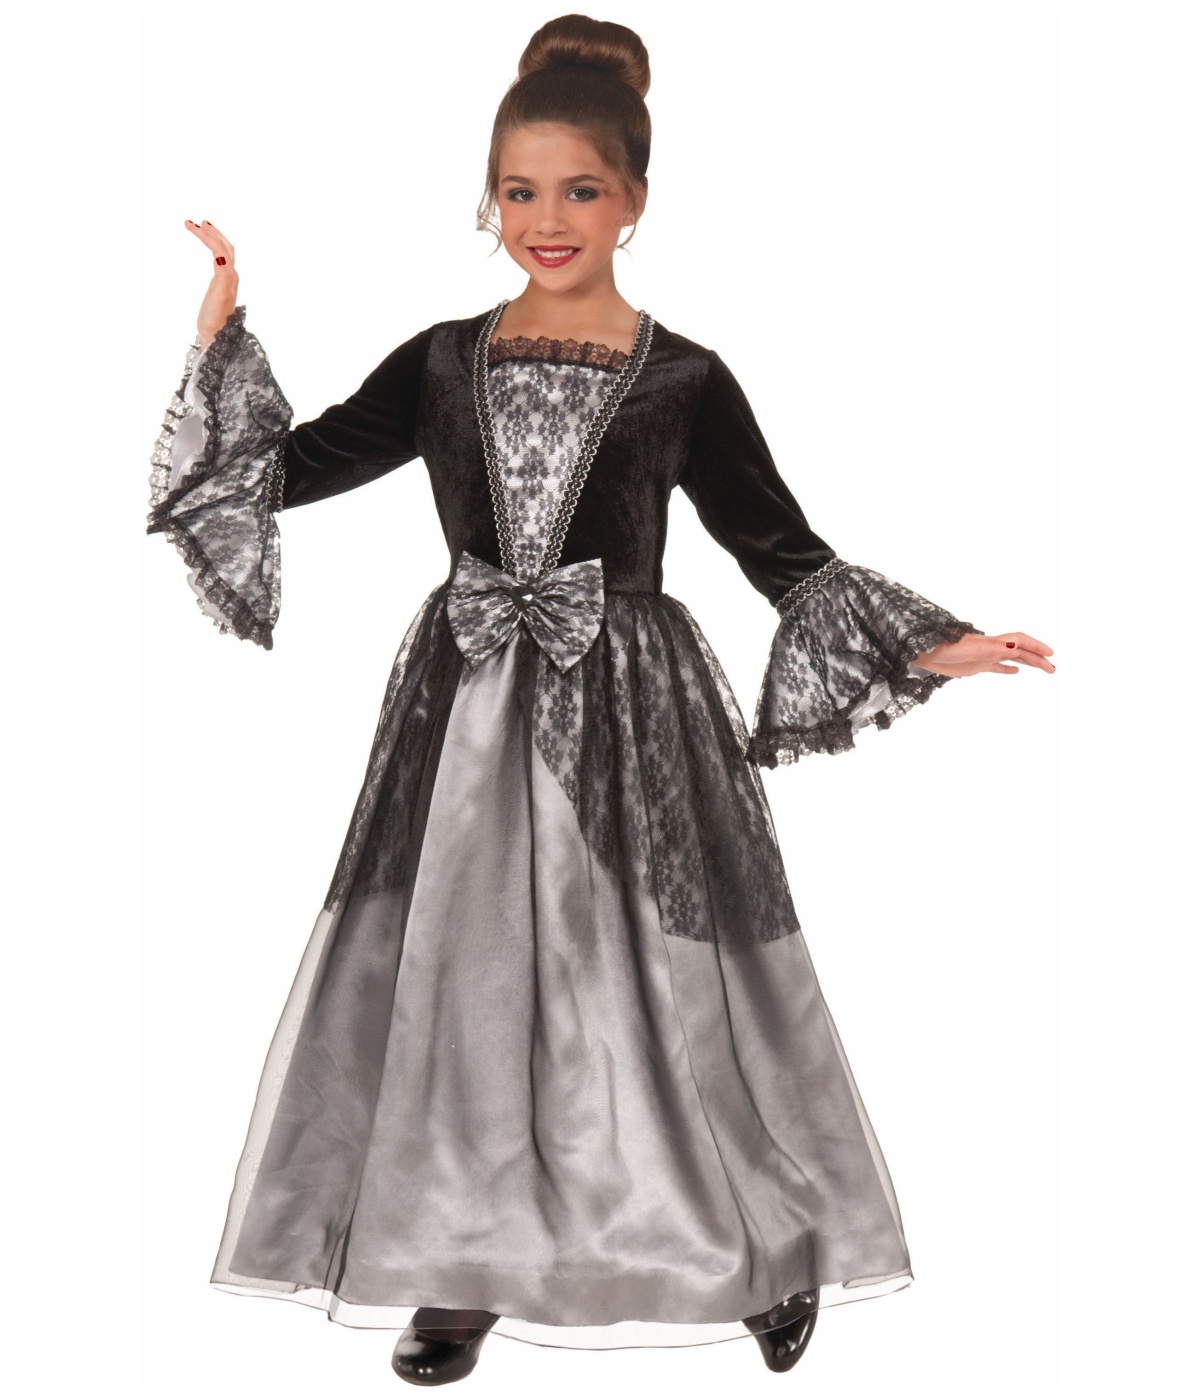  Girls Princess Gothic Costume